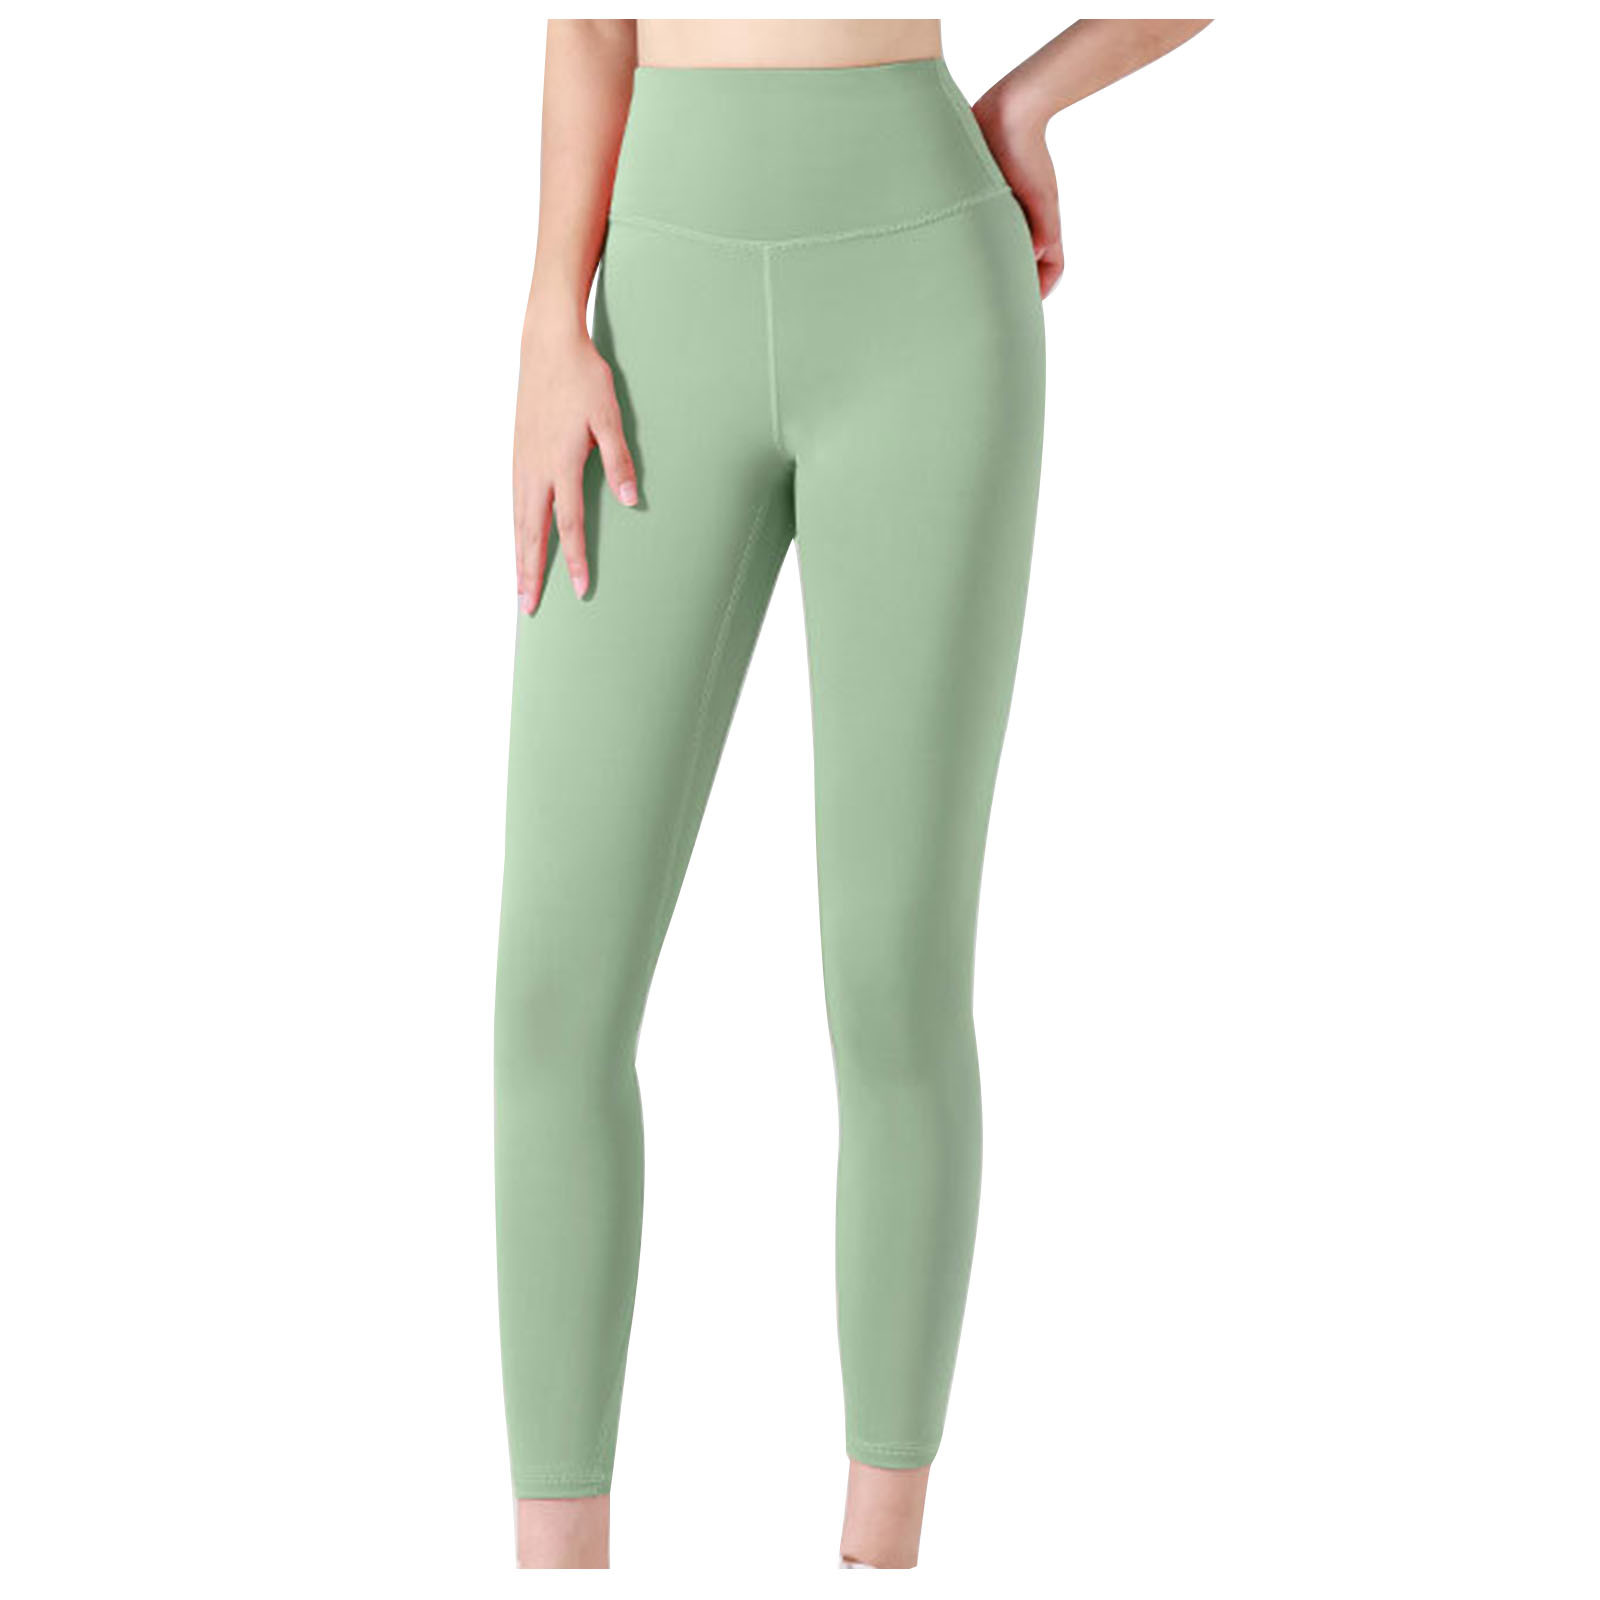 Lovzfmll Yoga Pants for Women, High Waist Slim Leg Solid Color Sport ...